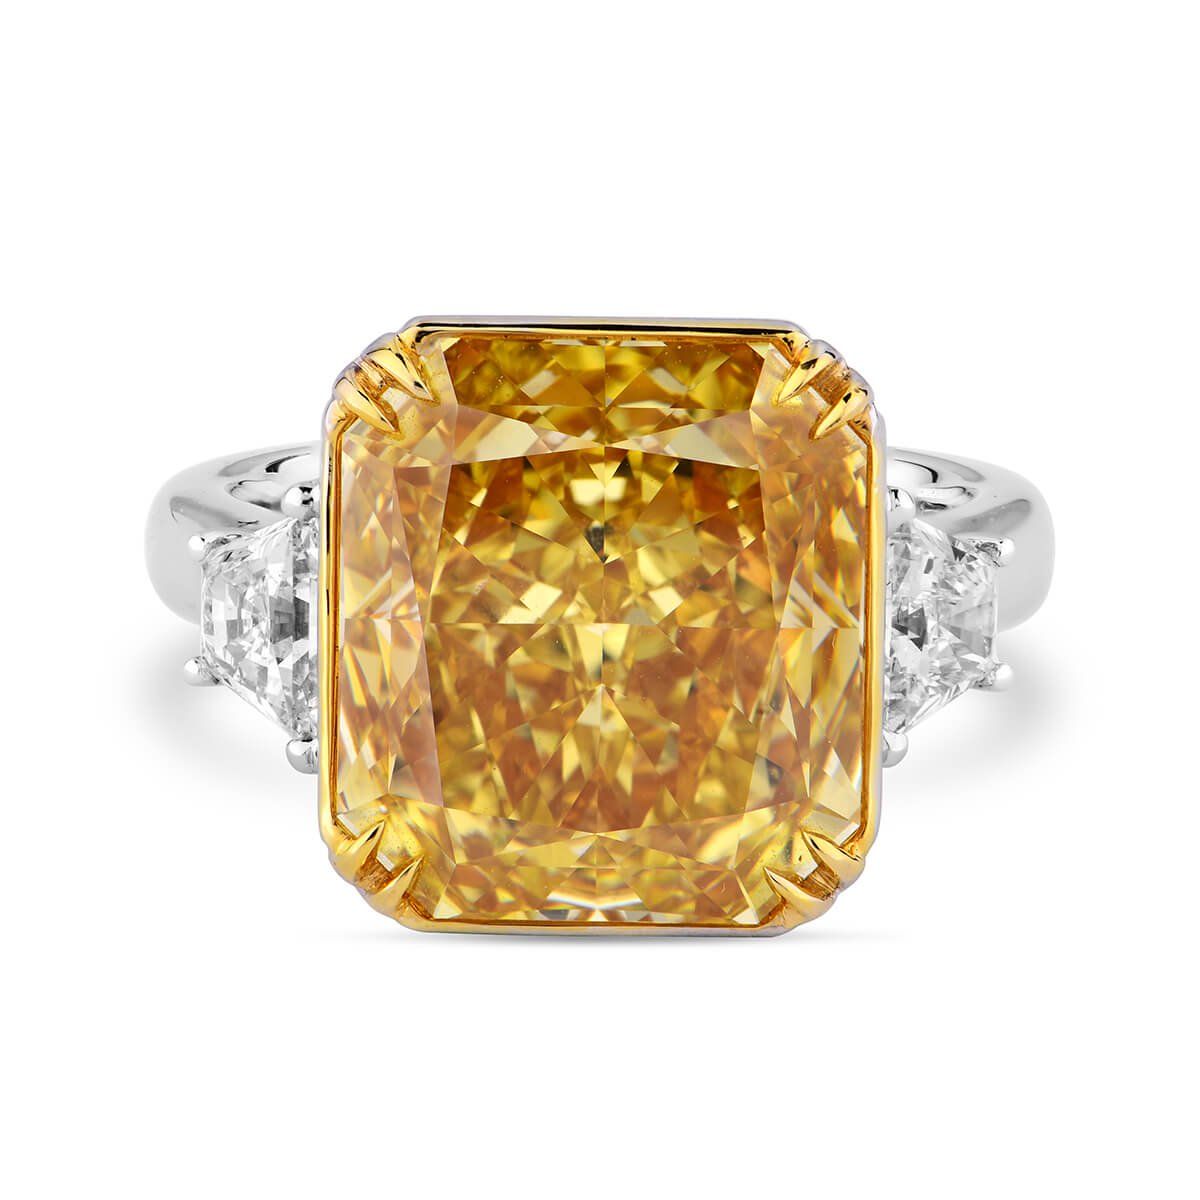 Fancy Deep Yellow Diamond Ring, 8.81 Ct. TW, Radiant shape, GIA Certified, 2193070328